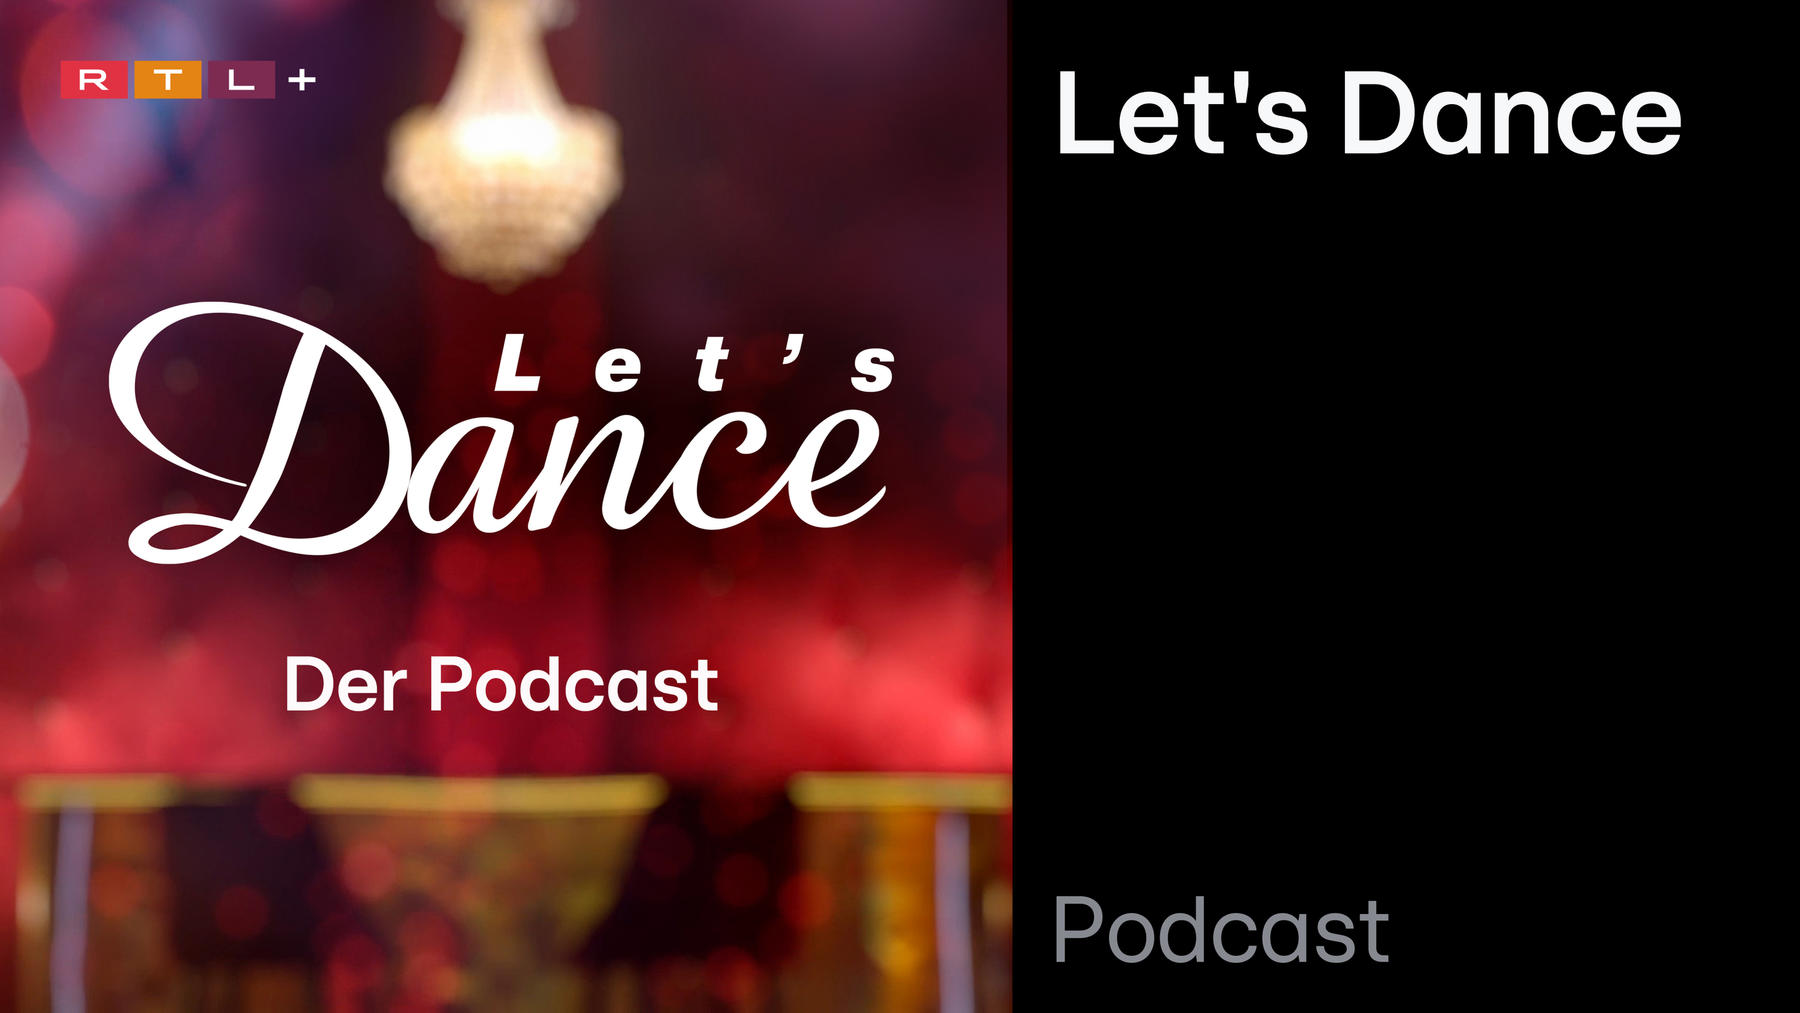 Podcast: Let's Dance - der offizielle Podcast